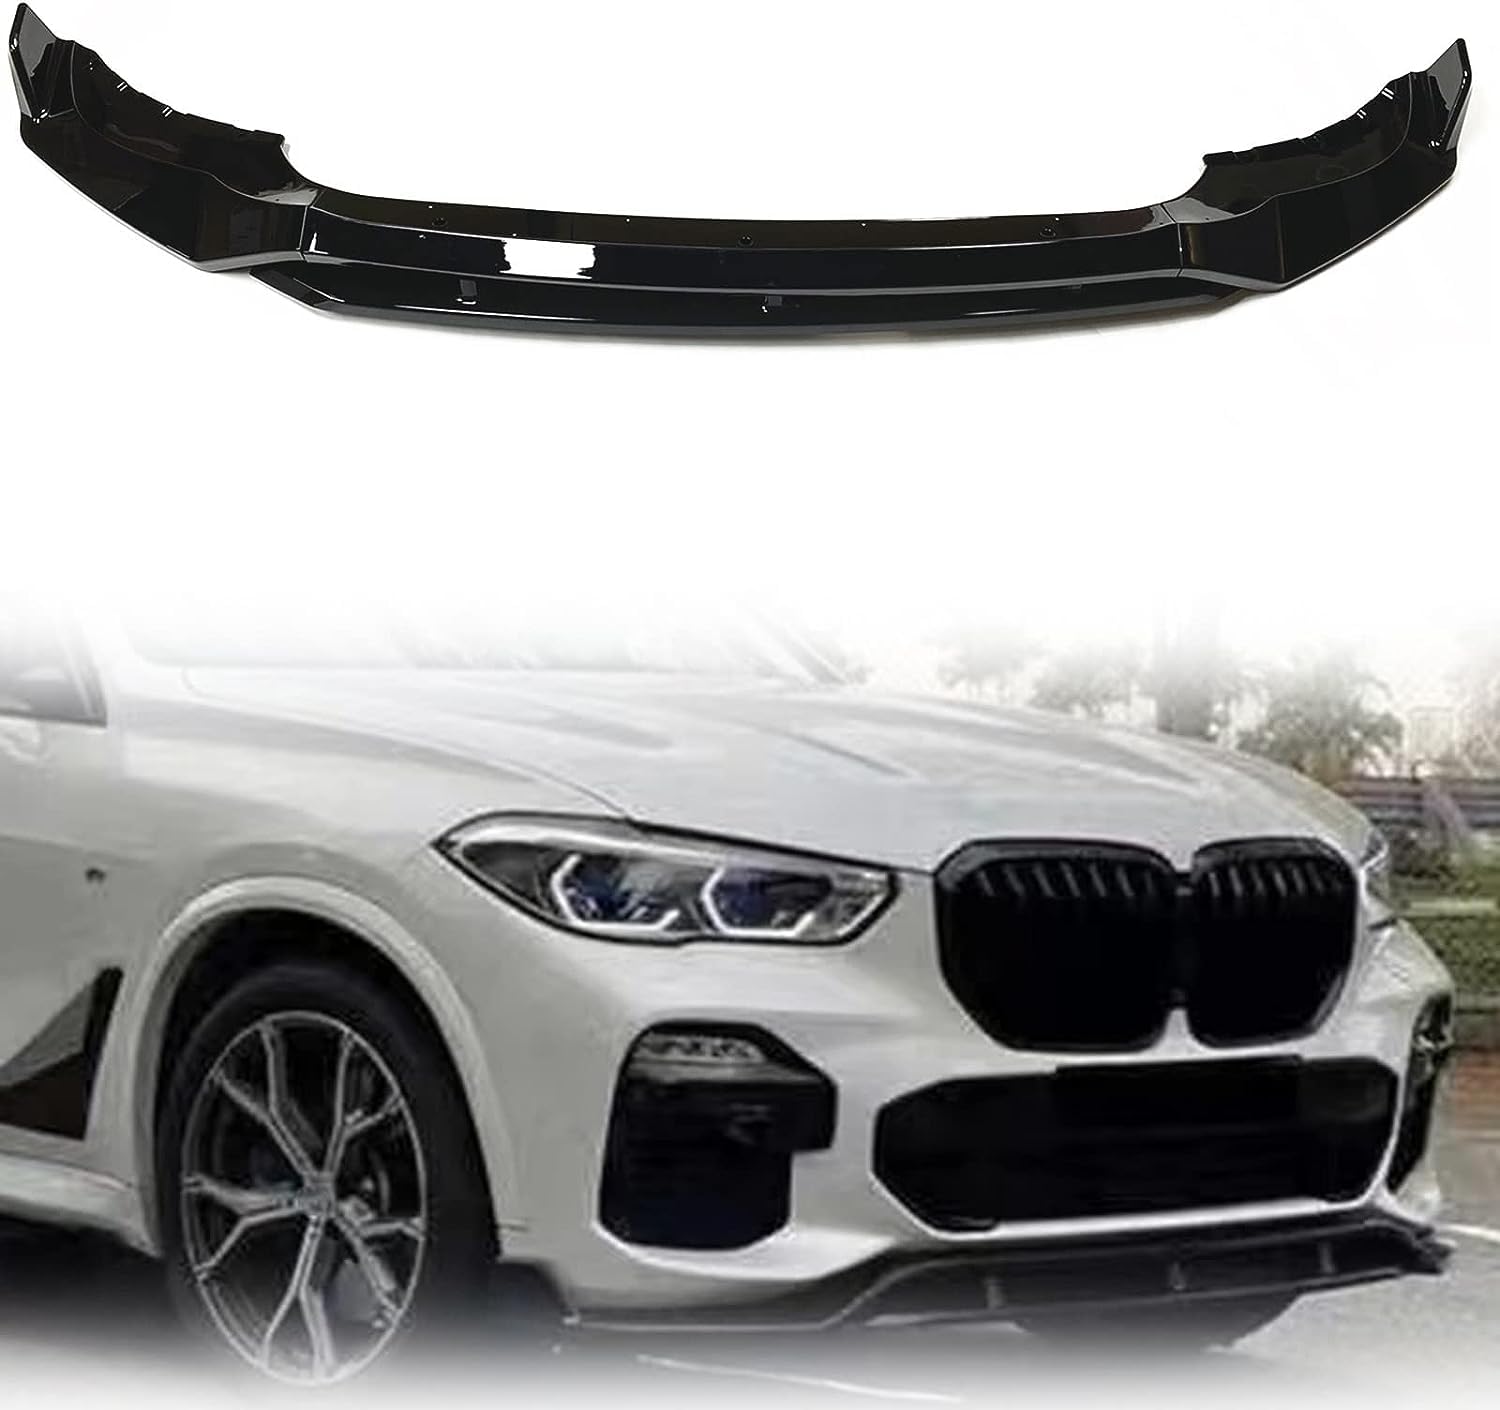 Auto Frontlippe Frontspoiler für BMW X5 G05 2019-2022, Frontstoßstange Splitter Lip Diffusor Frontspoiler Protector Kits von LCGAF